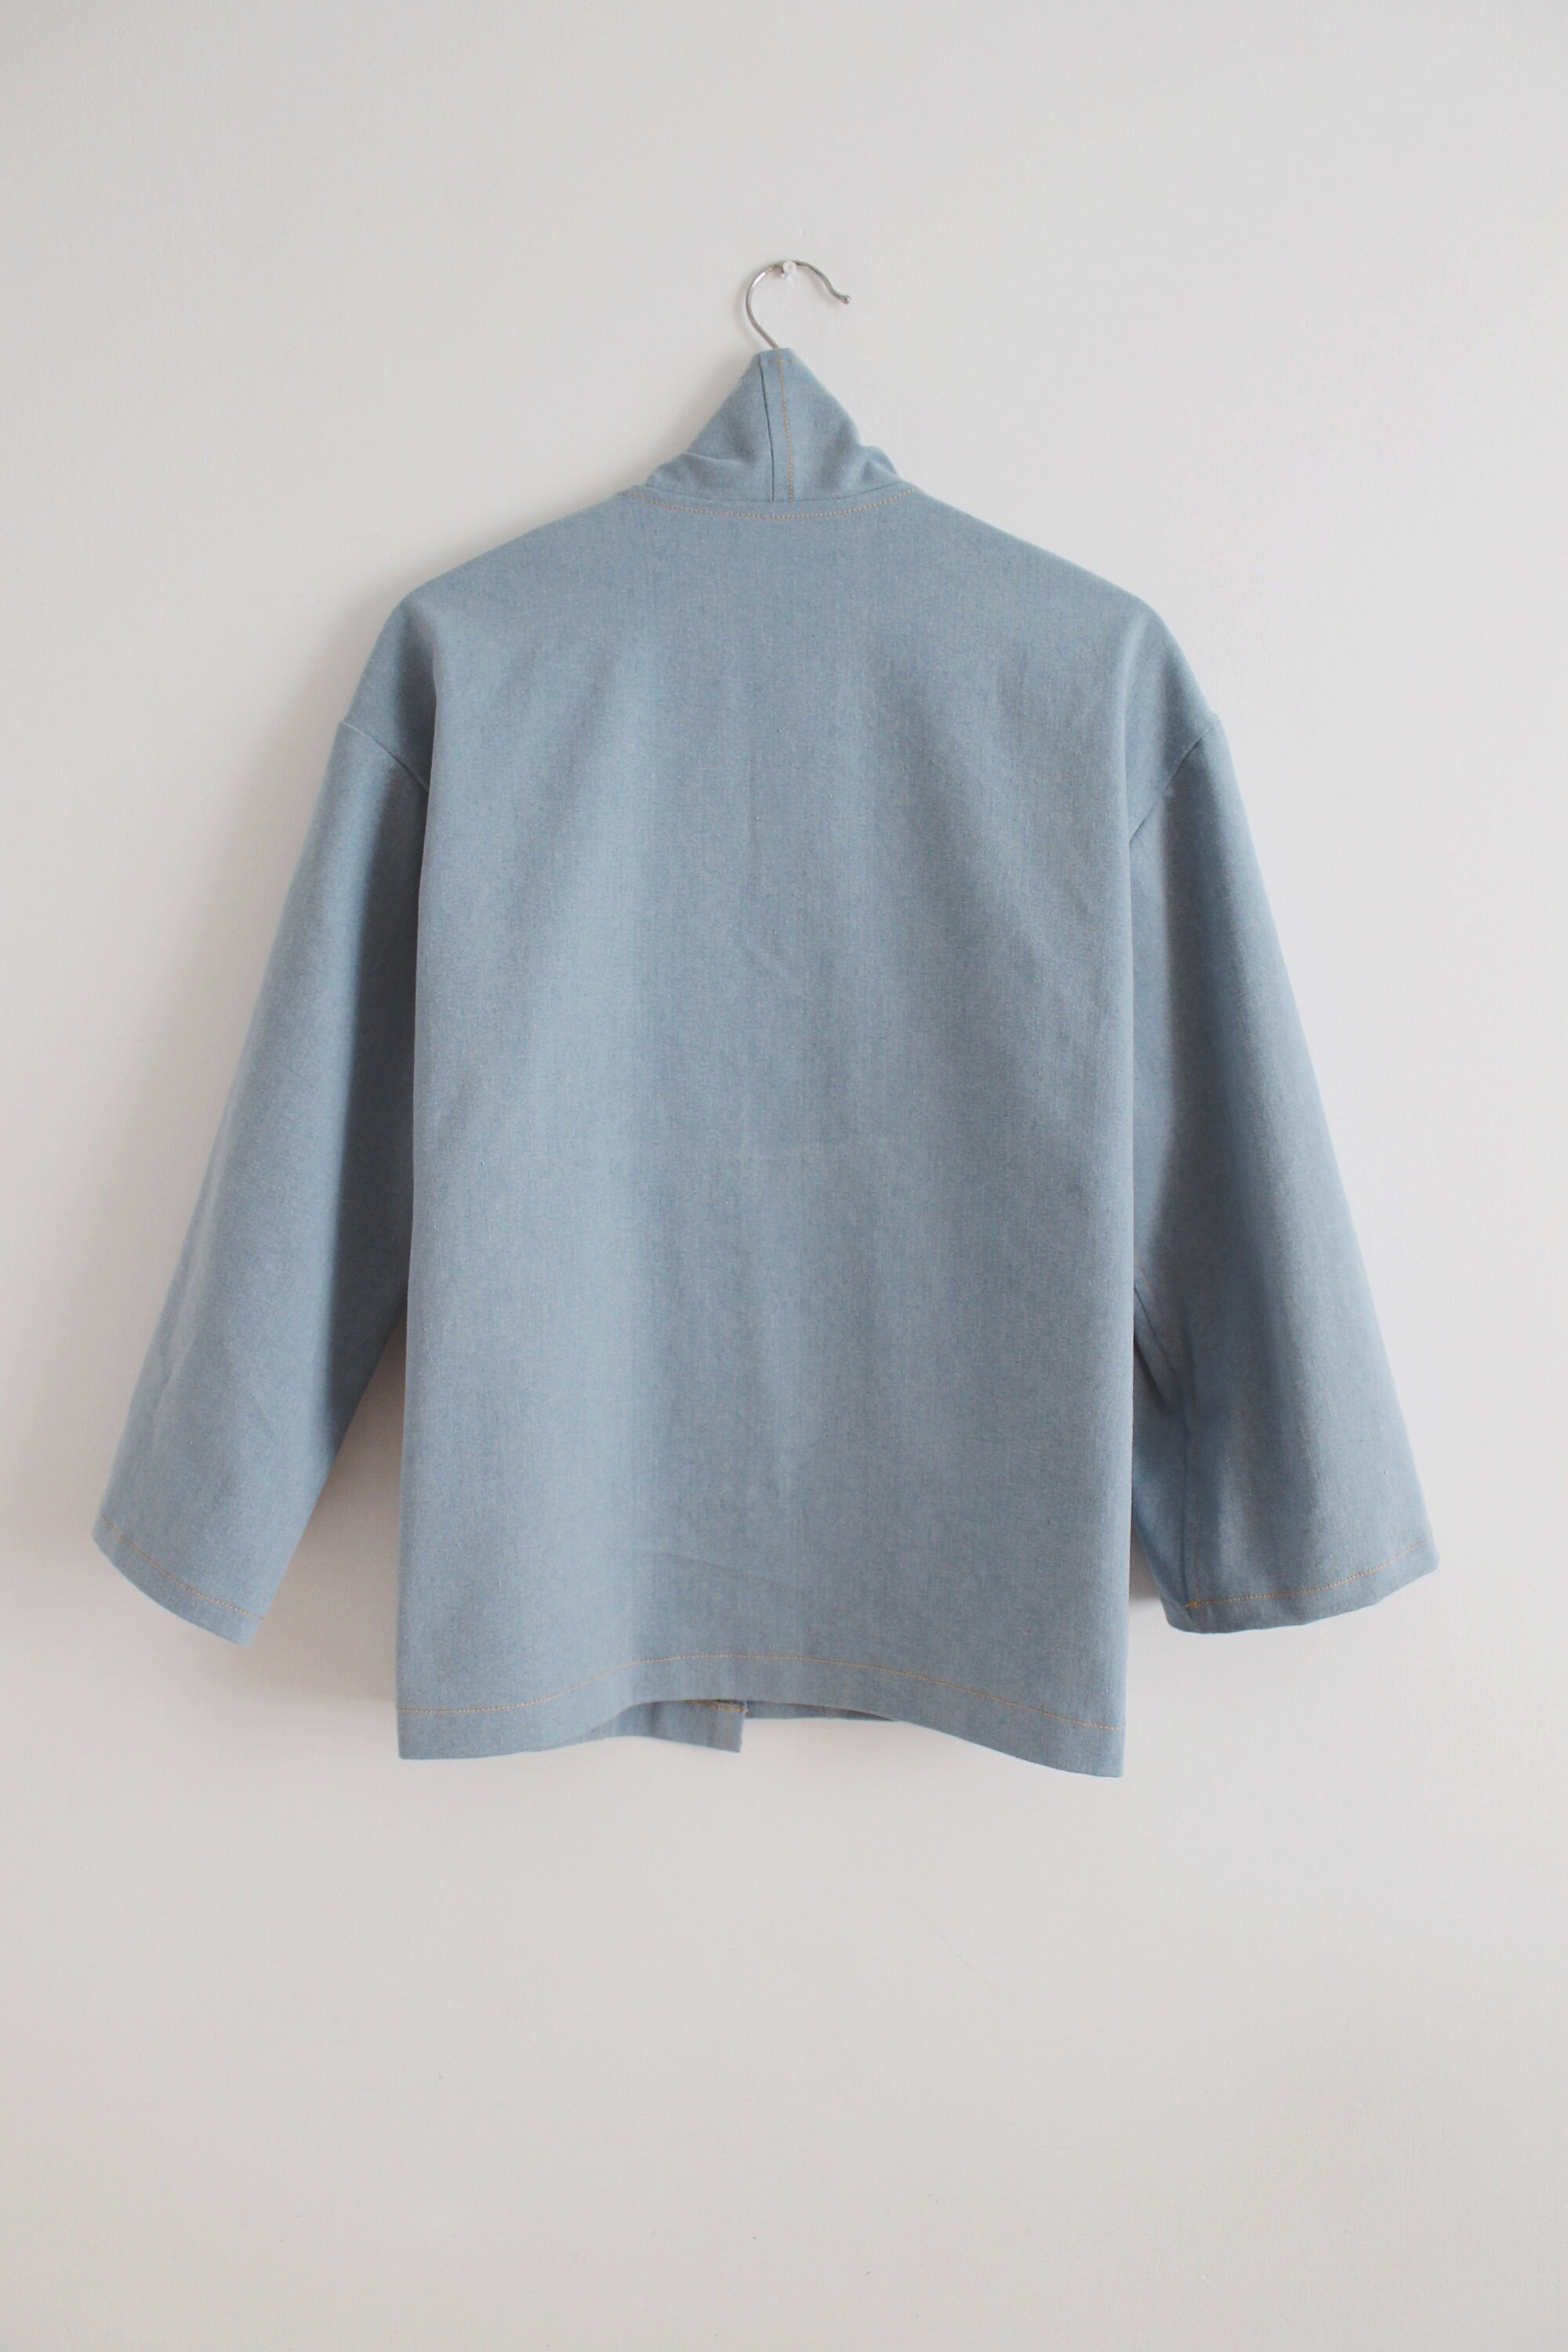 Embroidered denim blue jean jacket LAMPAembr | Etsy